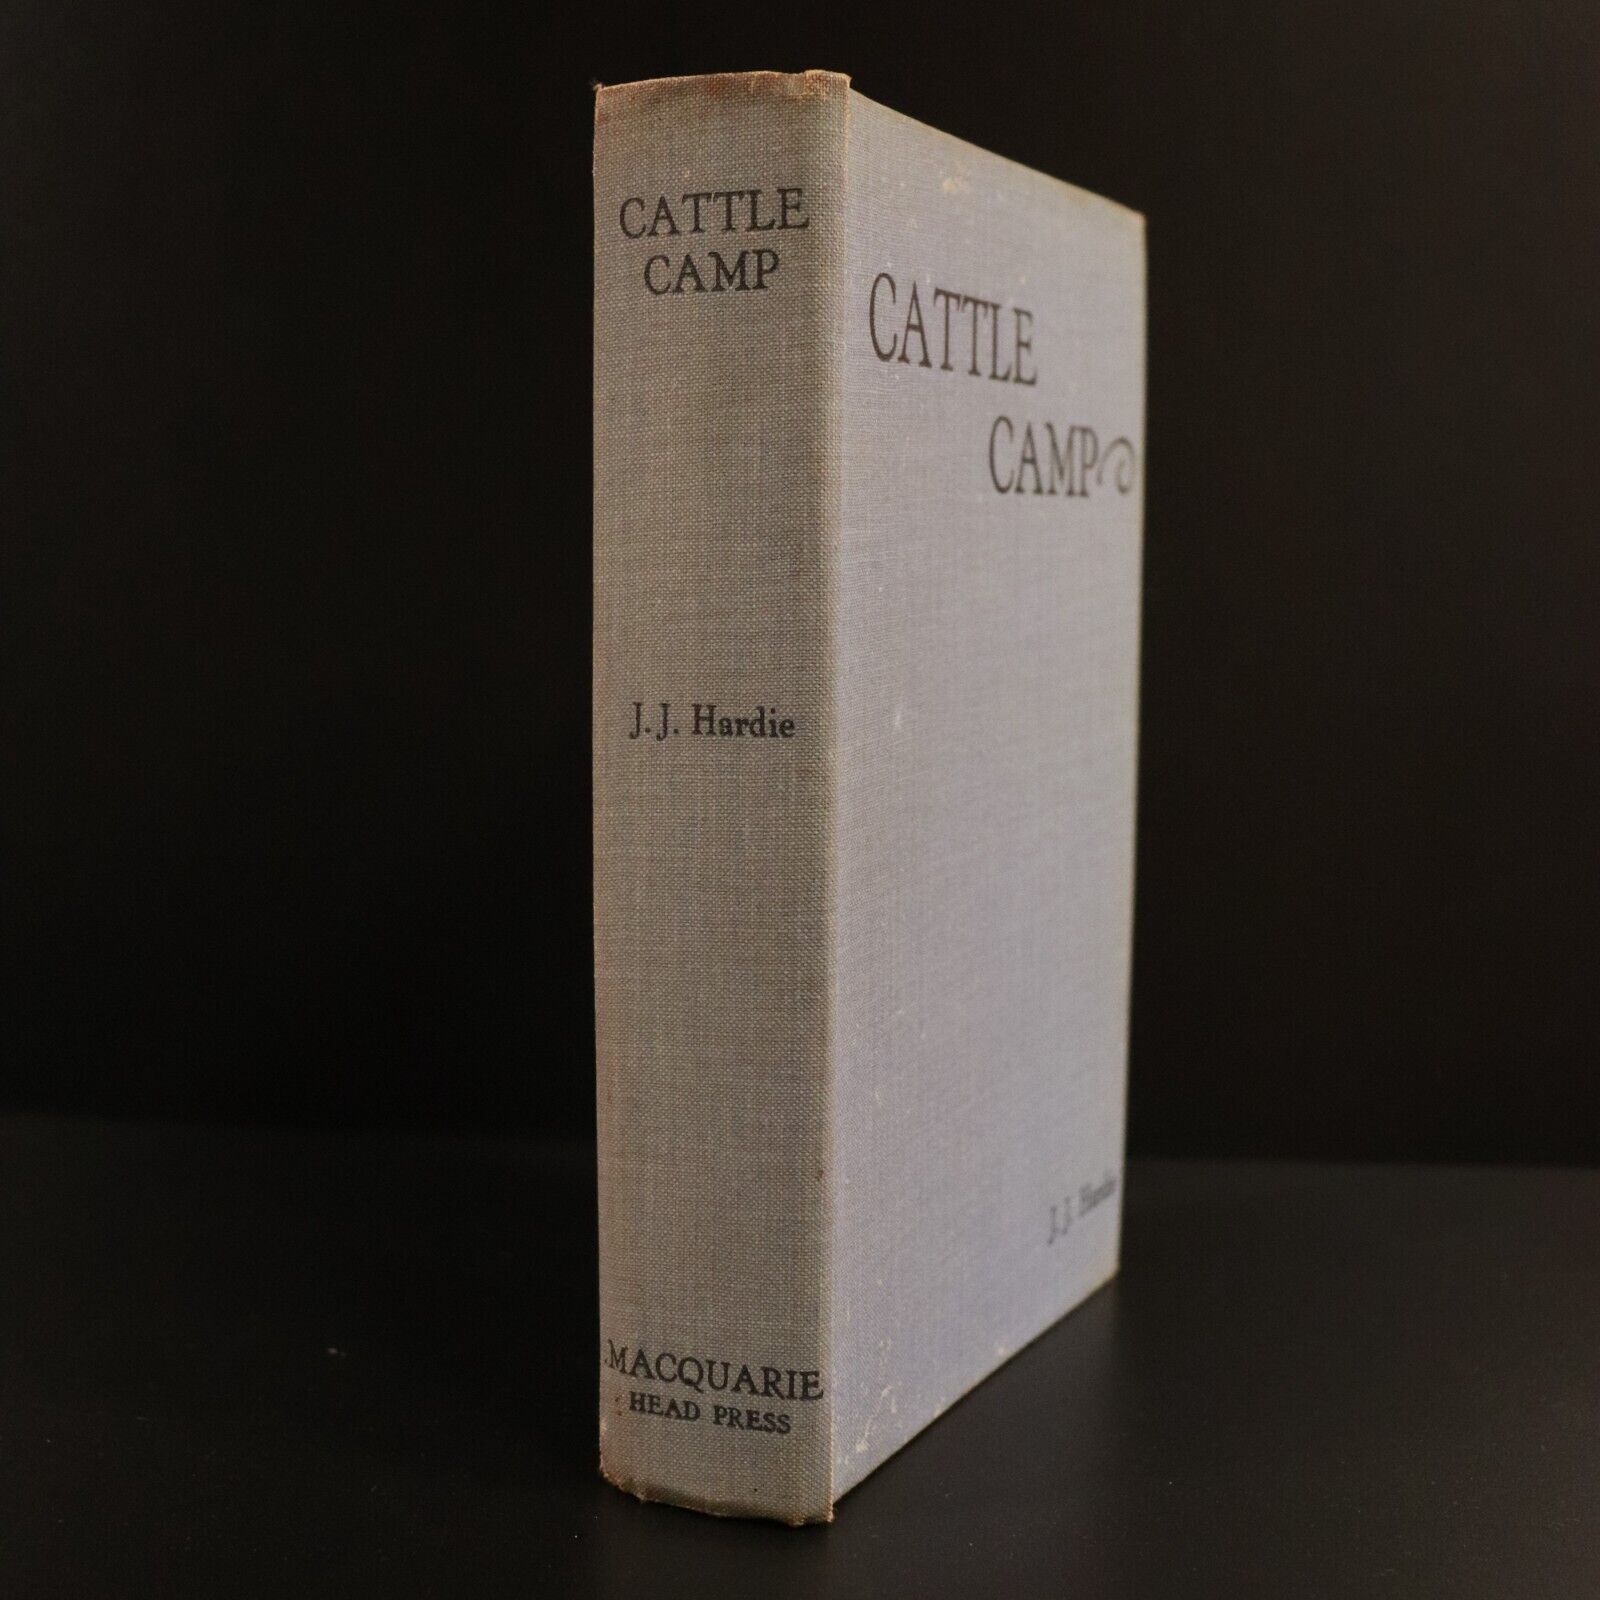 1934 Cattle Camp by J.J. Hardie Antique Australian Fiction Book Scarce